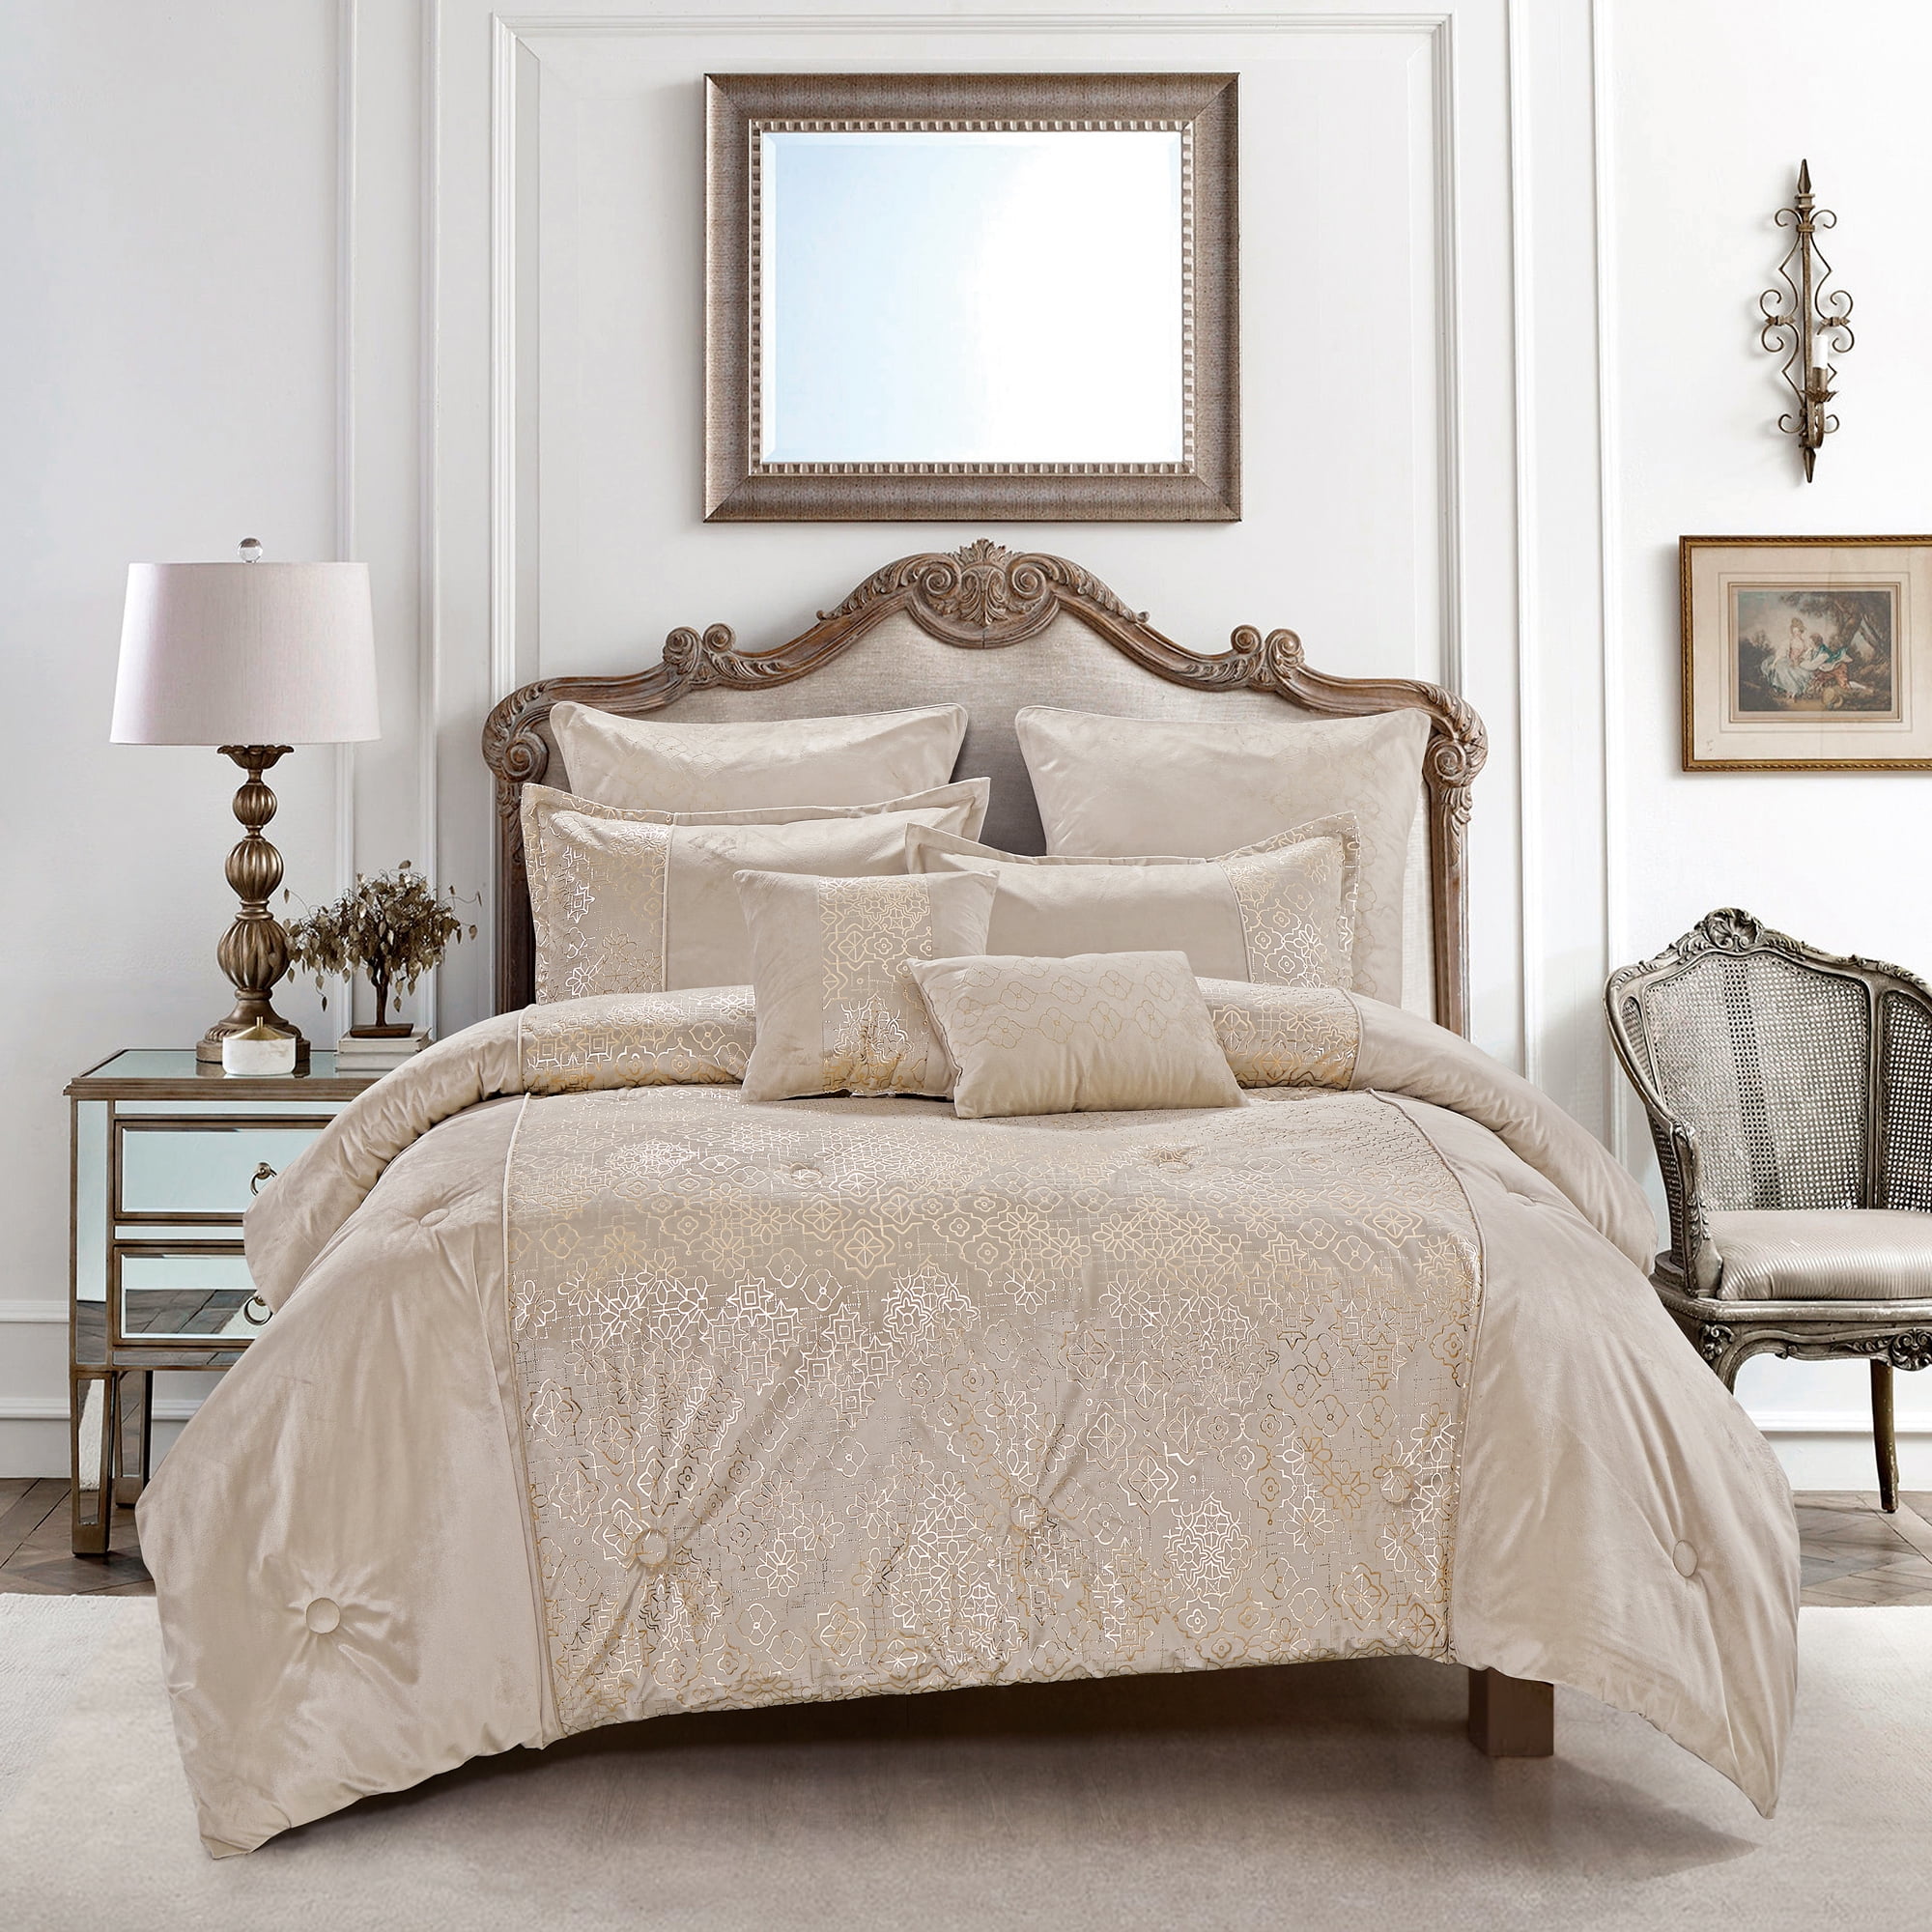 Luxury Queen Size Bedspreads